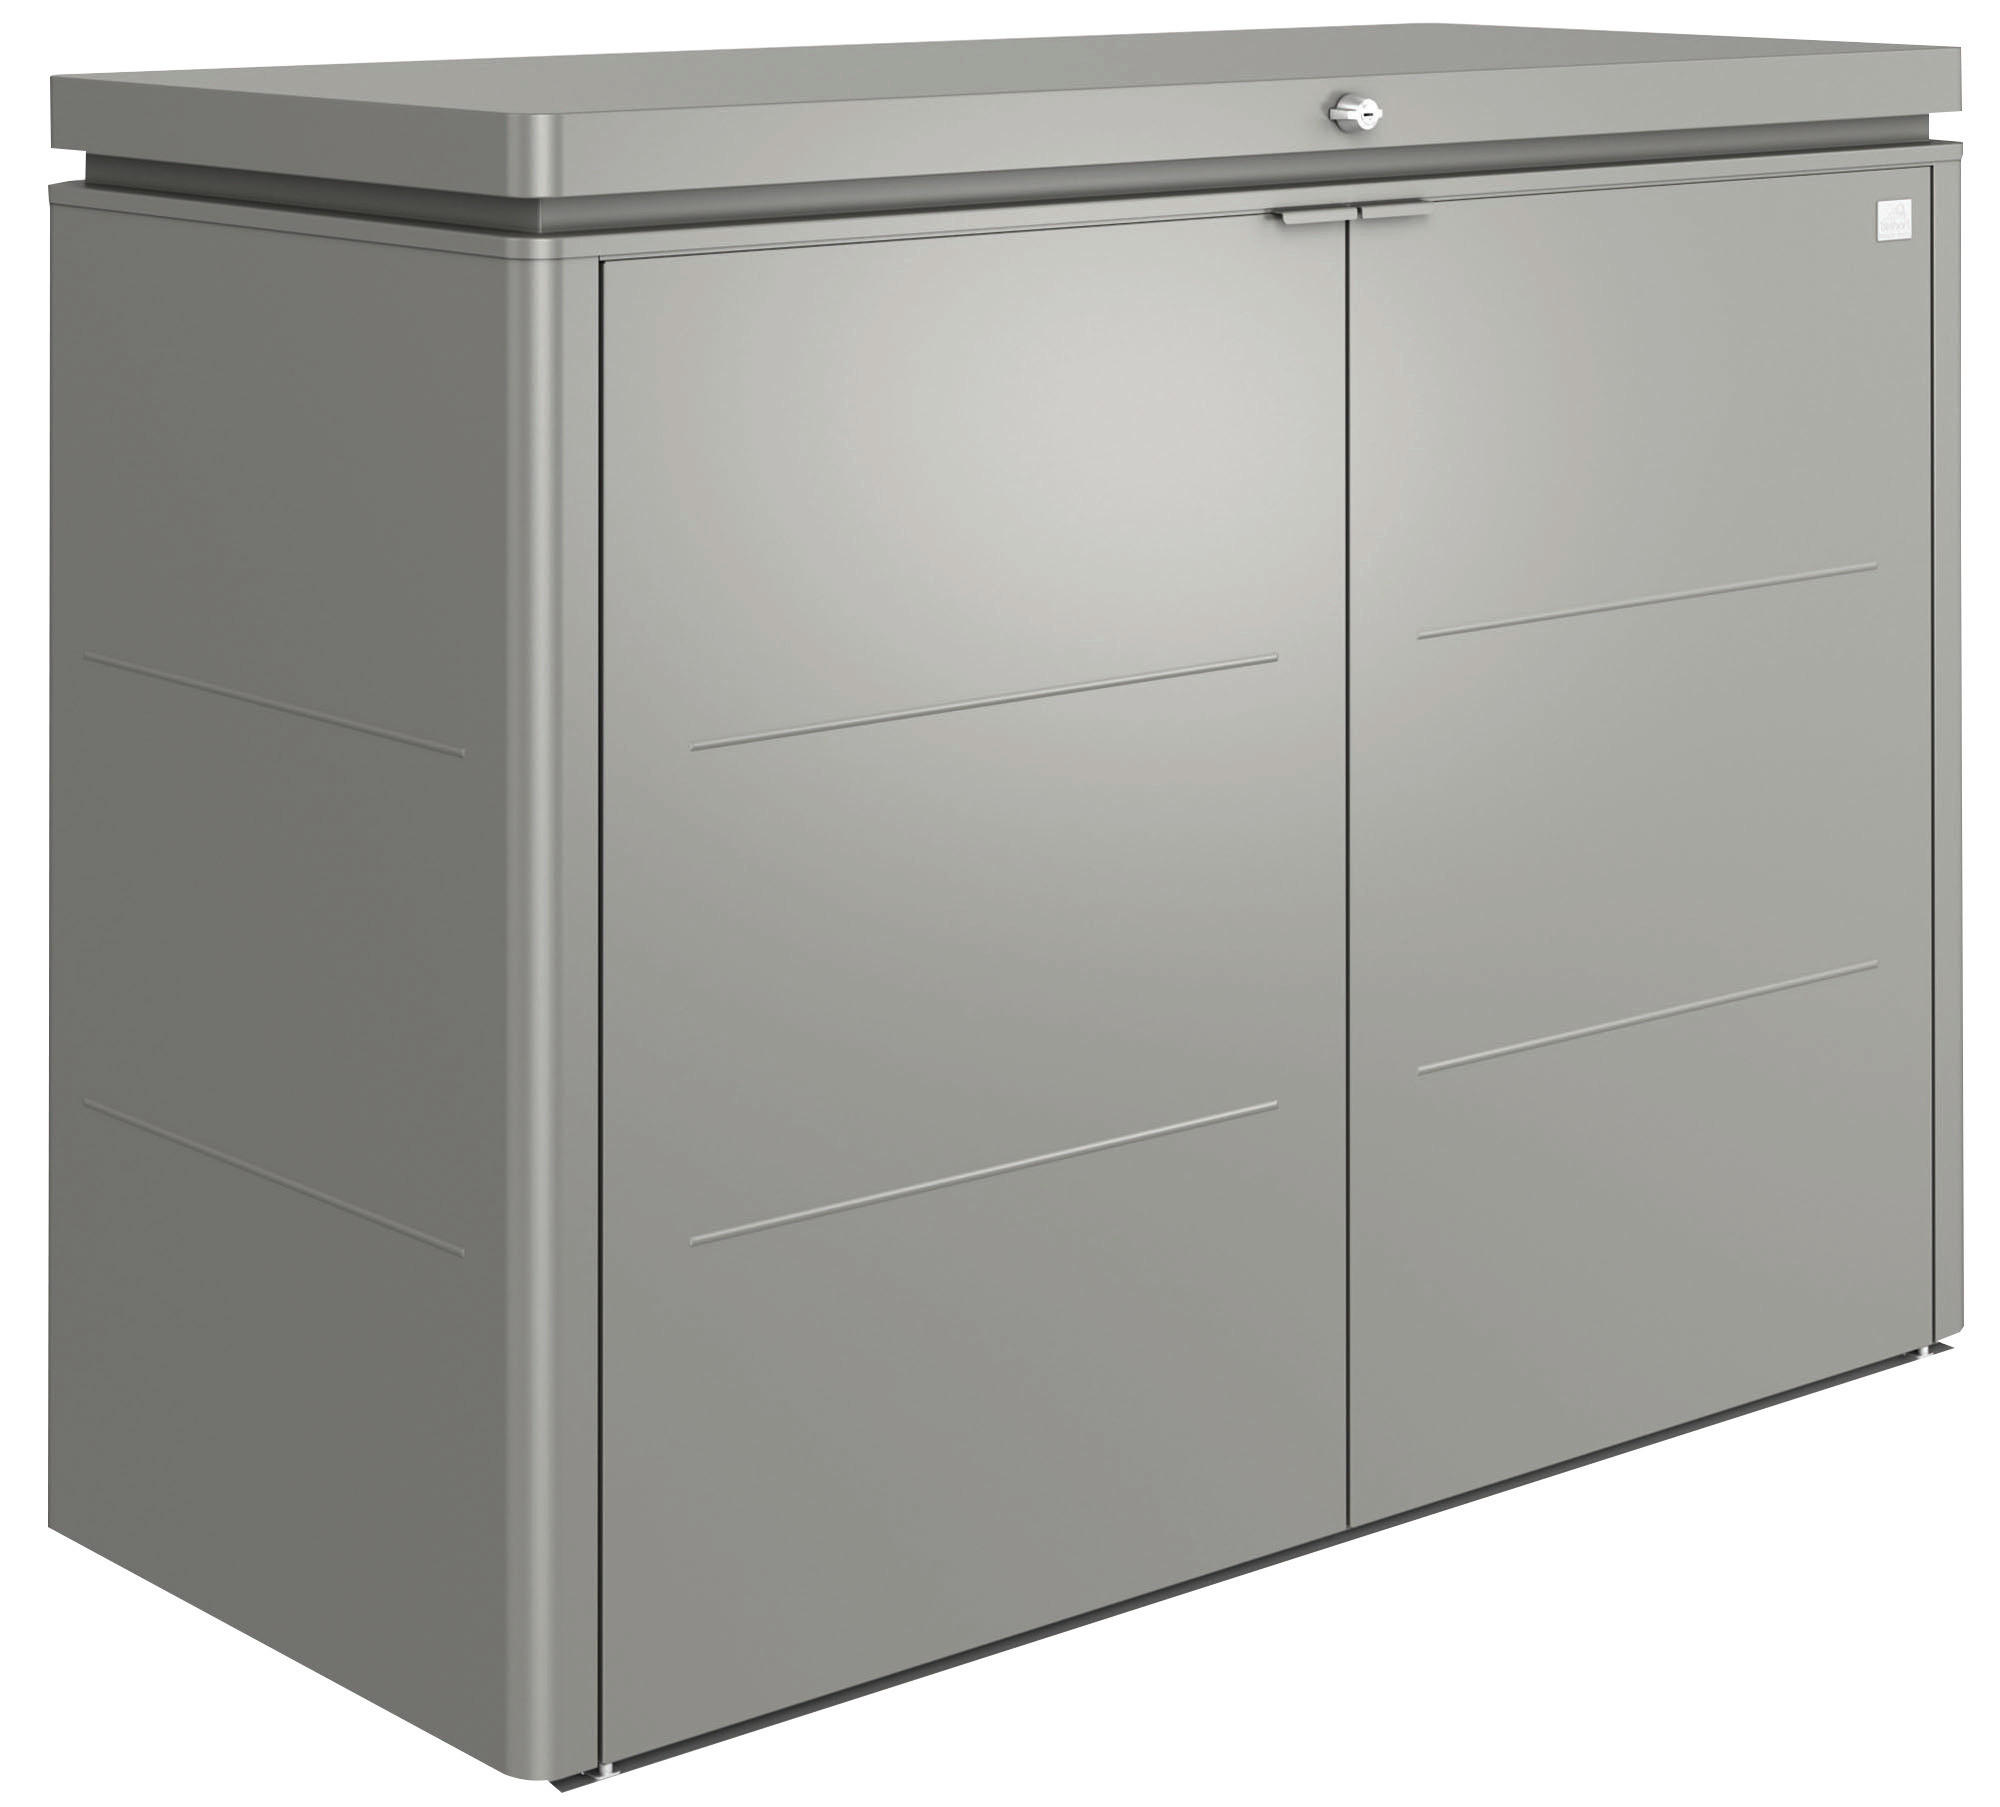 GARTENBOX - Grau, Design, Metall (160/118/70cm) - Biohort